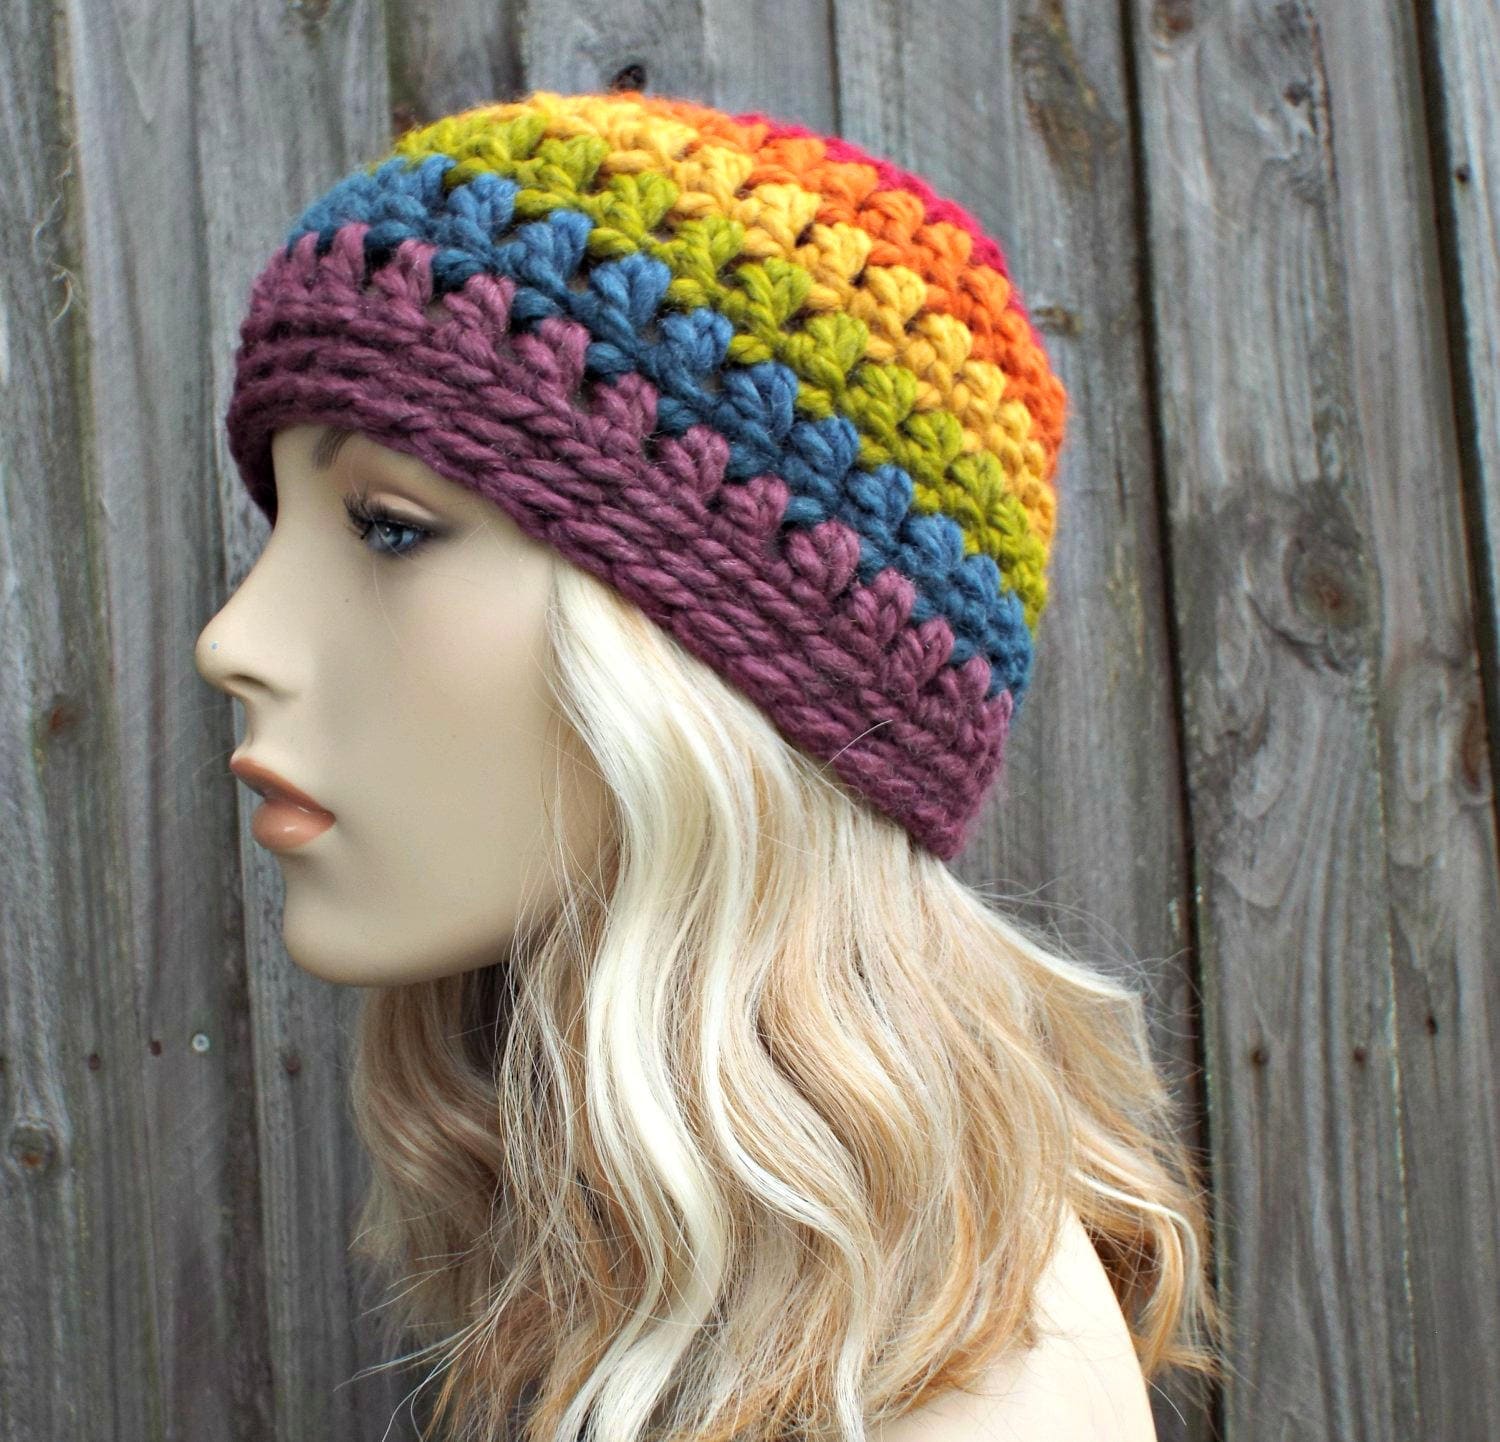 COLLJL8 Men & Women Rainbow Heart LGBT Outdoor Fashion Beanies Hat Soft Winter Skull Caps